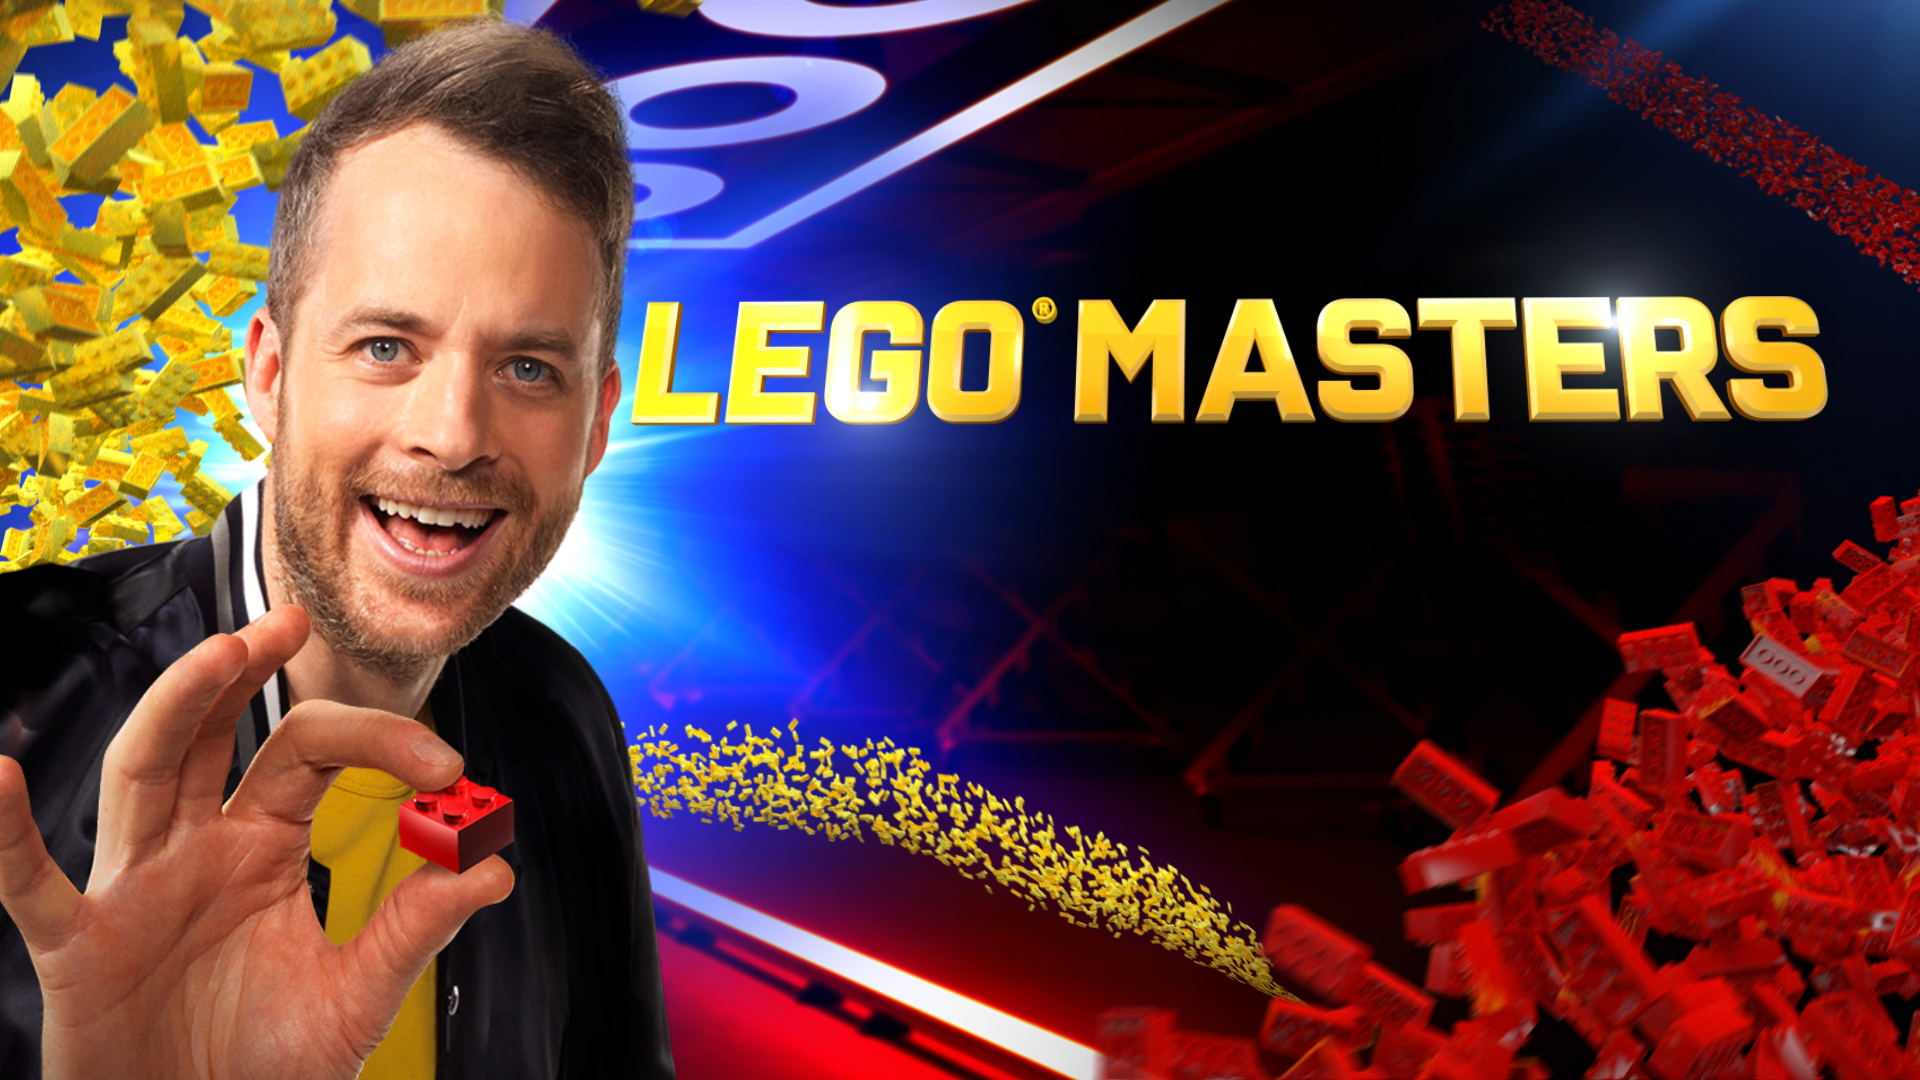 Lego Masters Winner Build 'LEGO Masters' title will help Bradenton